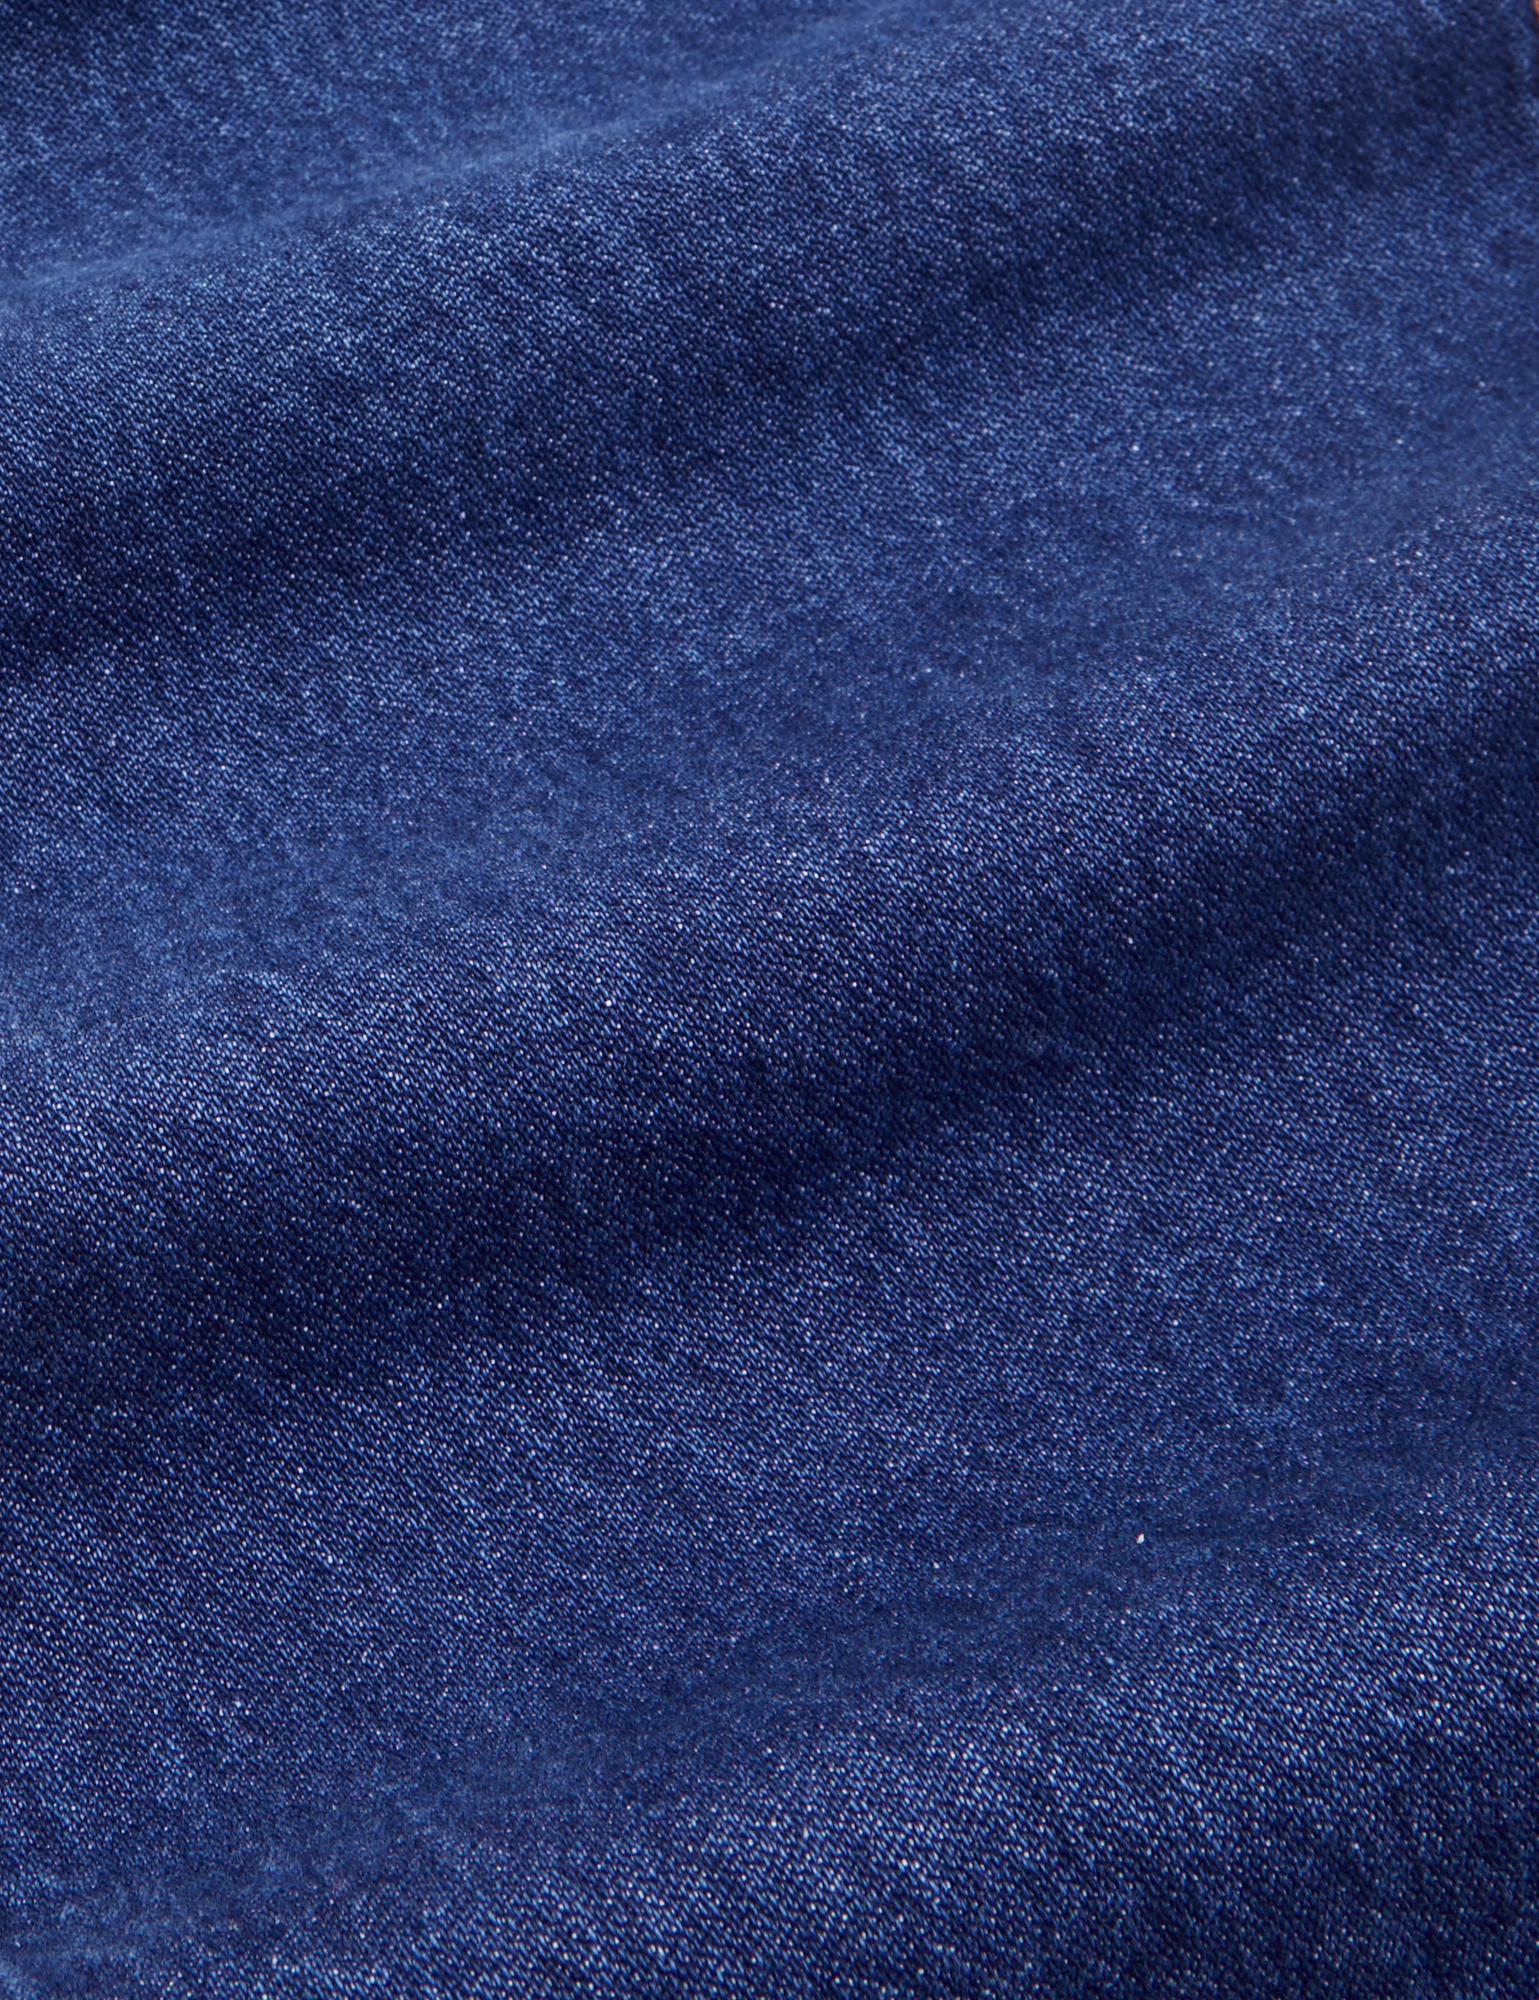 Denim, Types of Cotton Fabrics